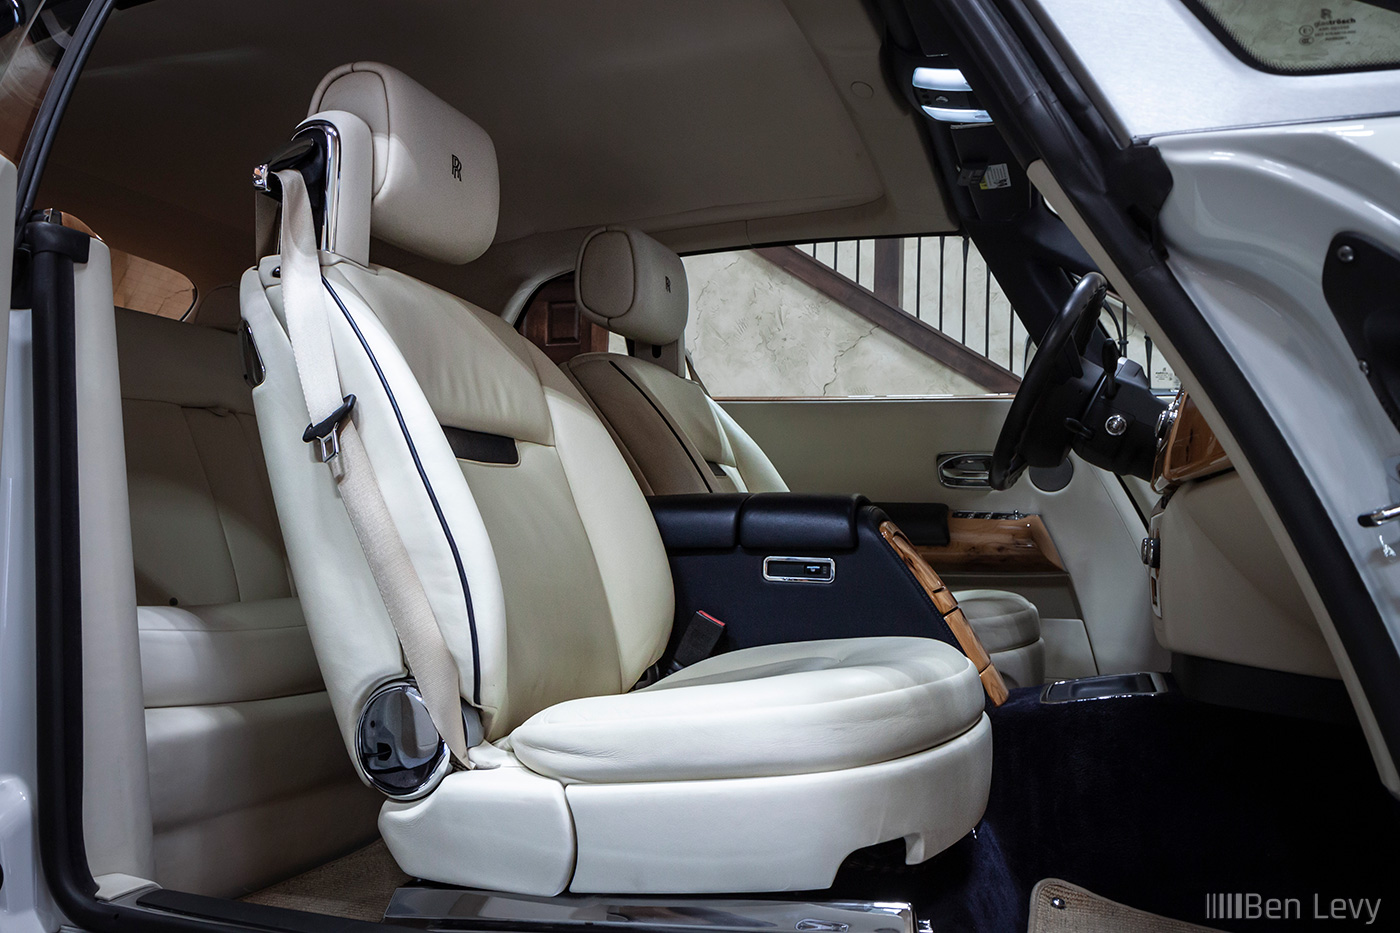 Rolls-Royce Phantom Drophead Coupe seats